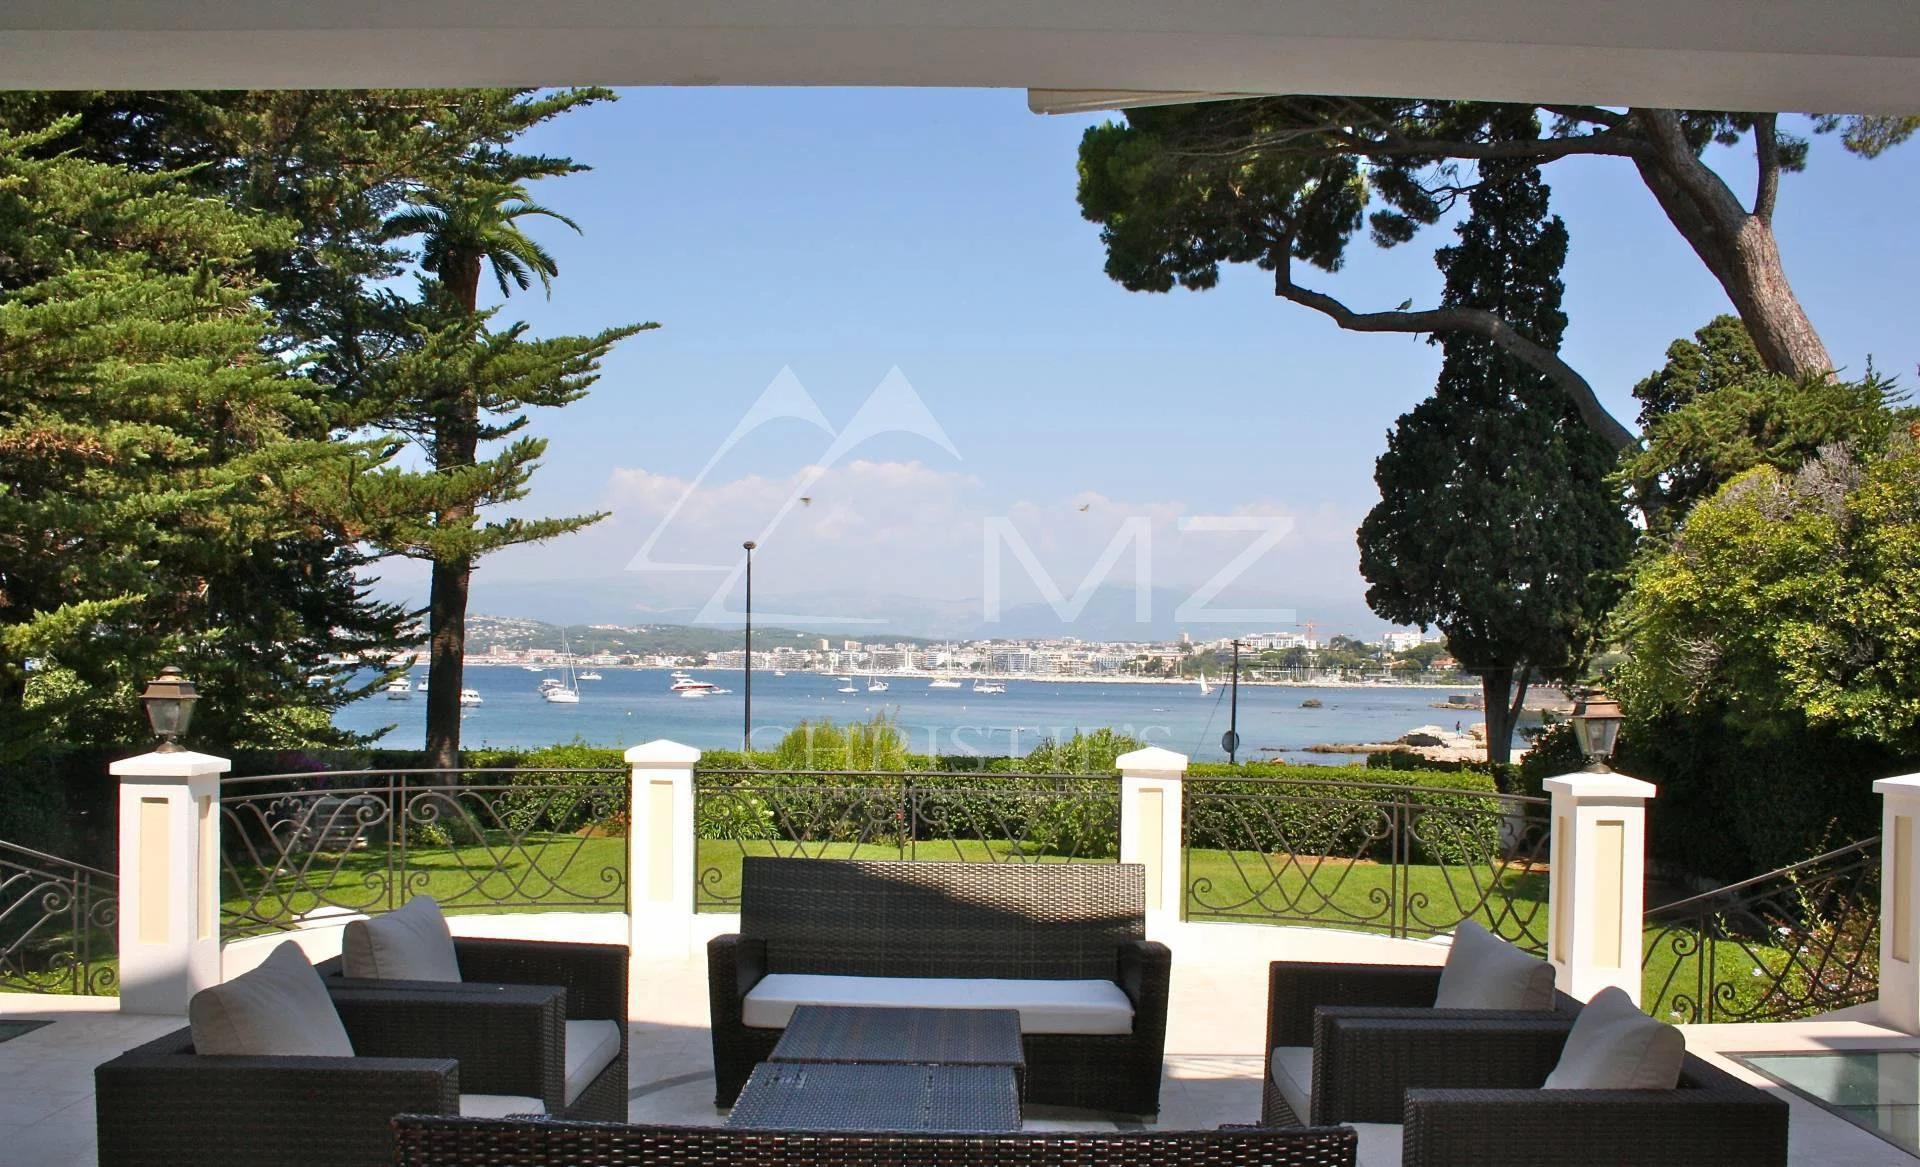 Villa mit Panorama-Meerblick in perfektem Zustand